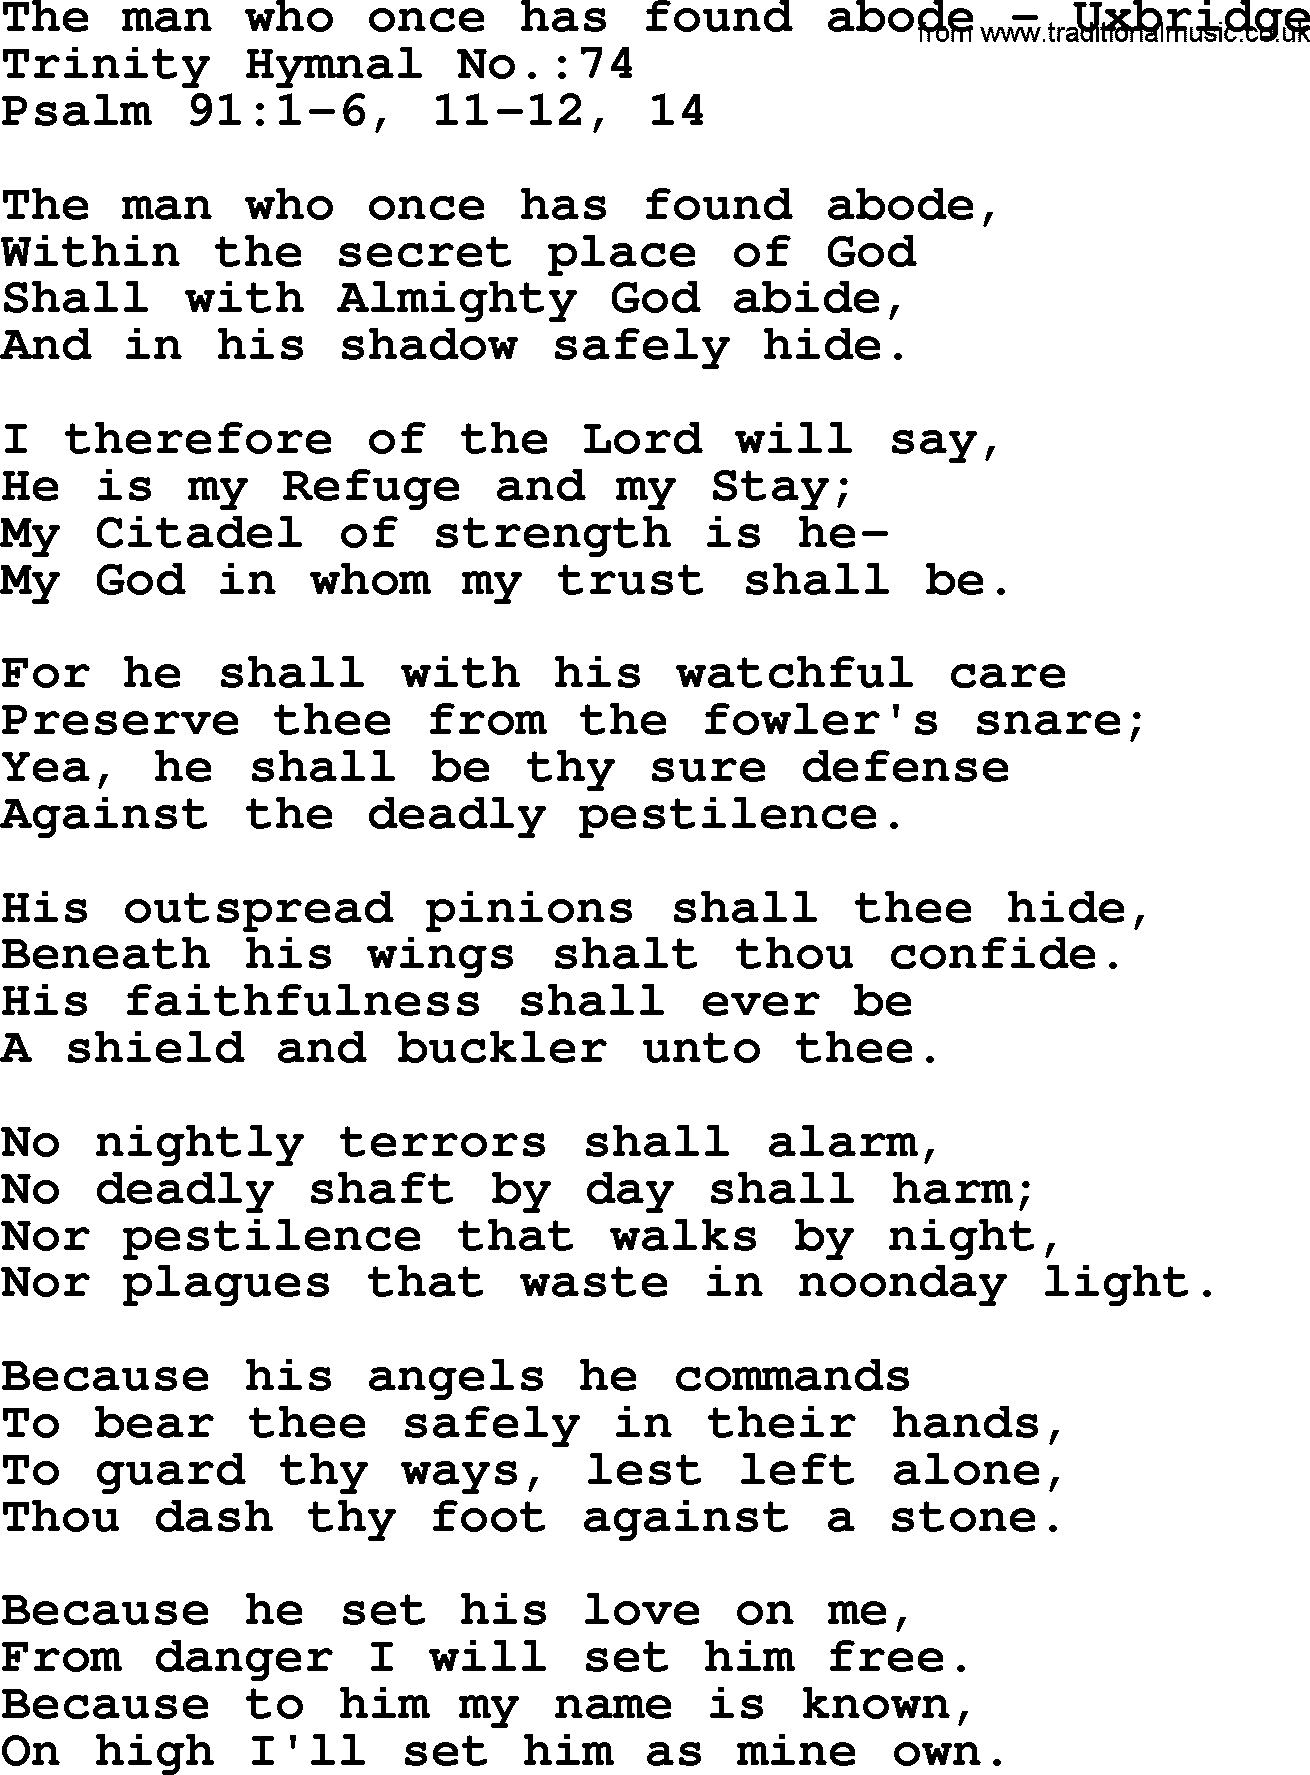 Trinity Hymnal Hymn: The Man Who Once Has Found Abode--Uxbridge, lyrics with midi music